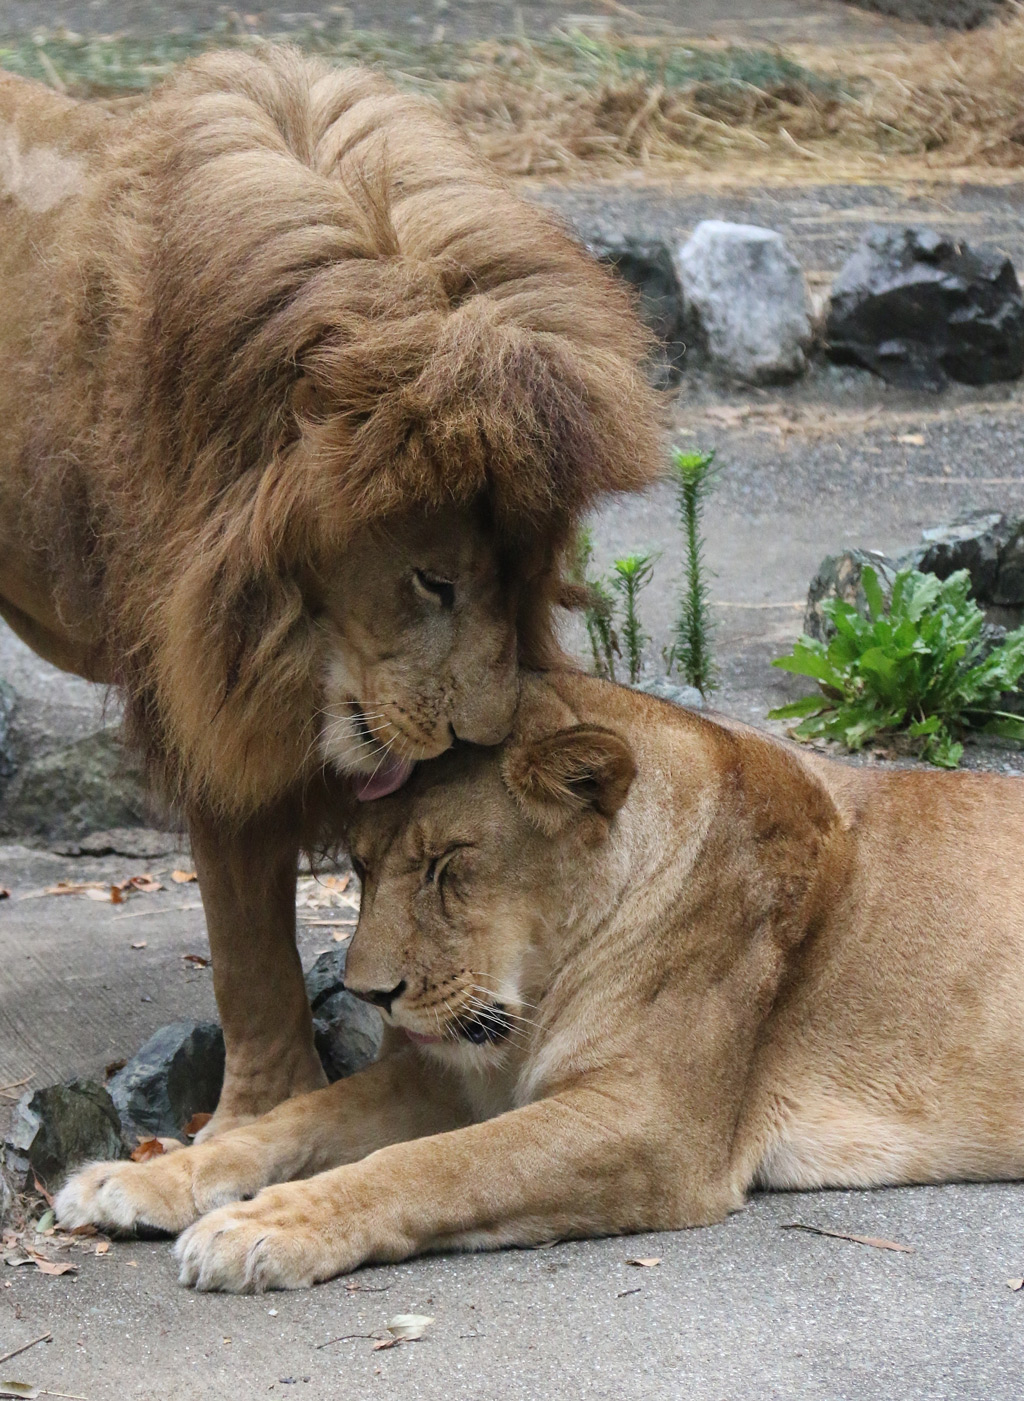 A good behaviour of lion